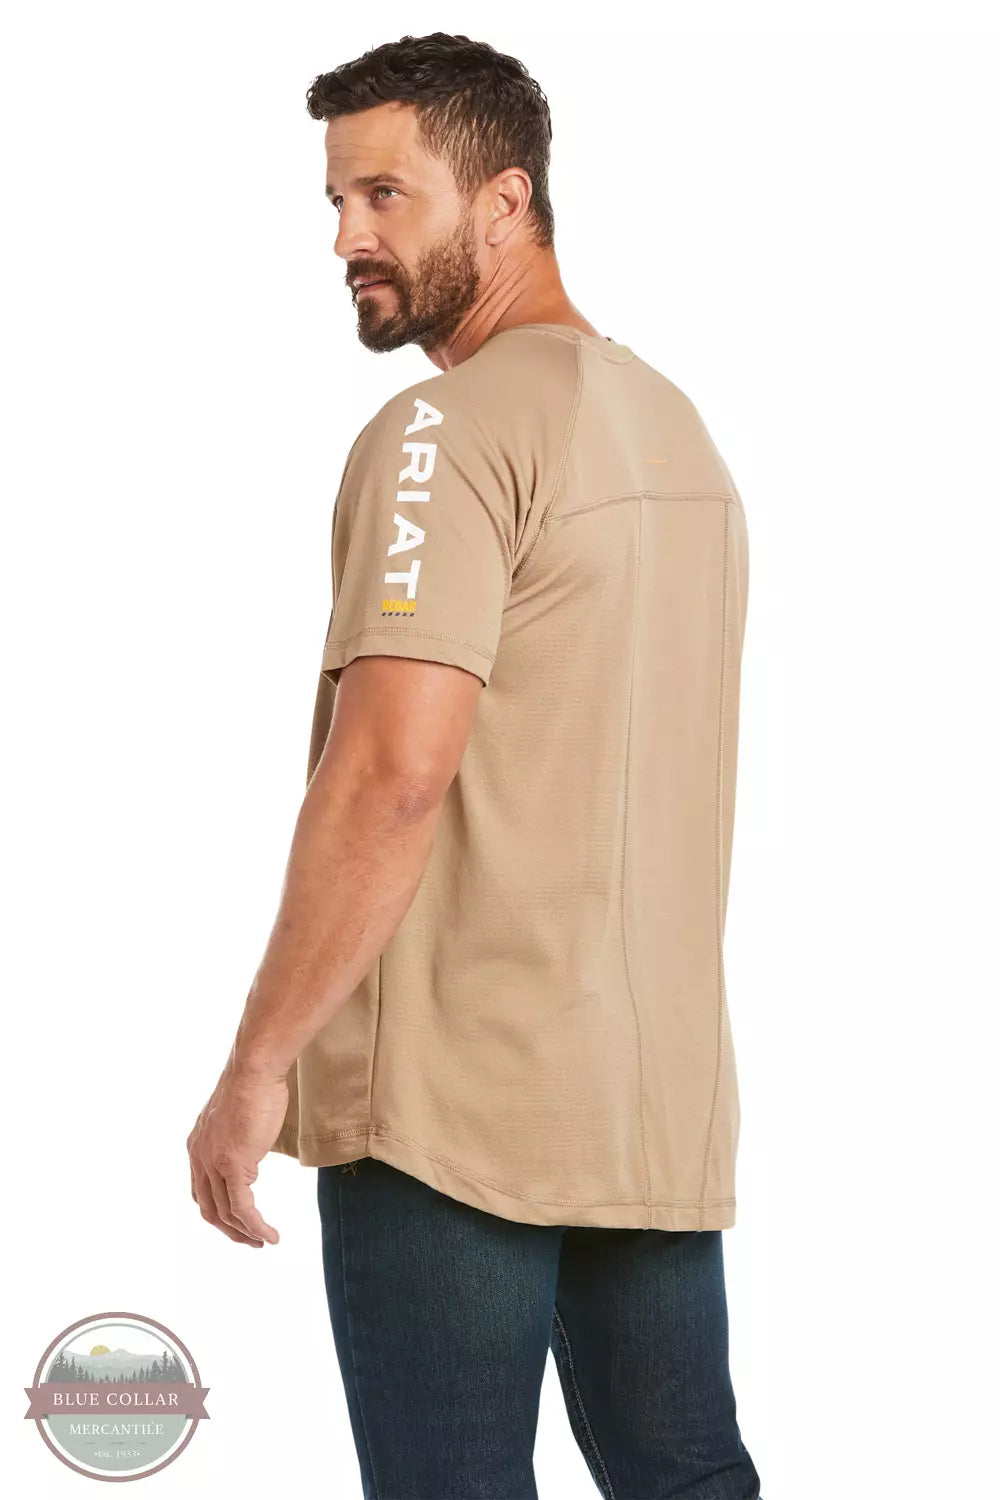 Ariat 10031036 Rebar Heat Fighter Short Sleeve T-Shirt in Khaki Side View